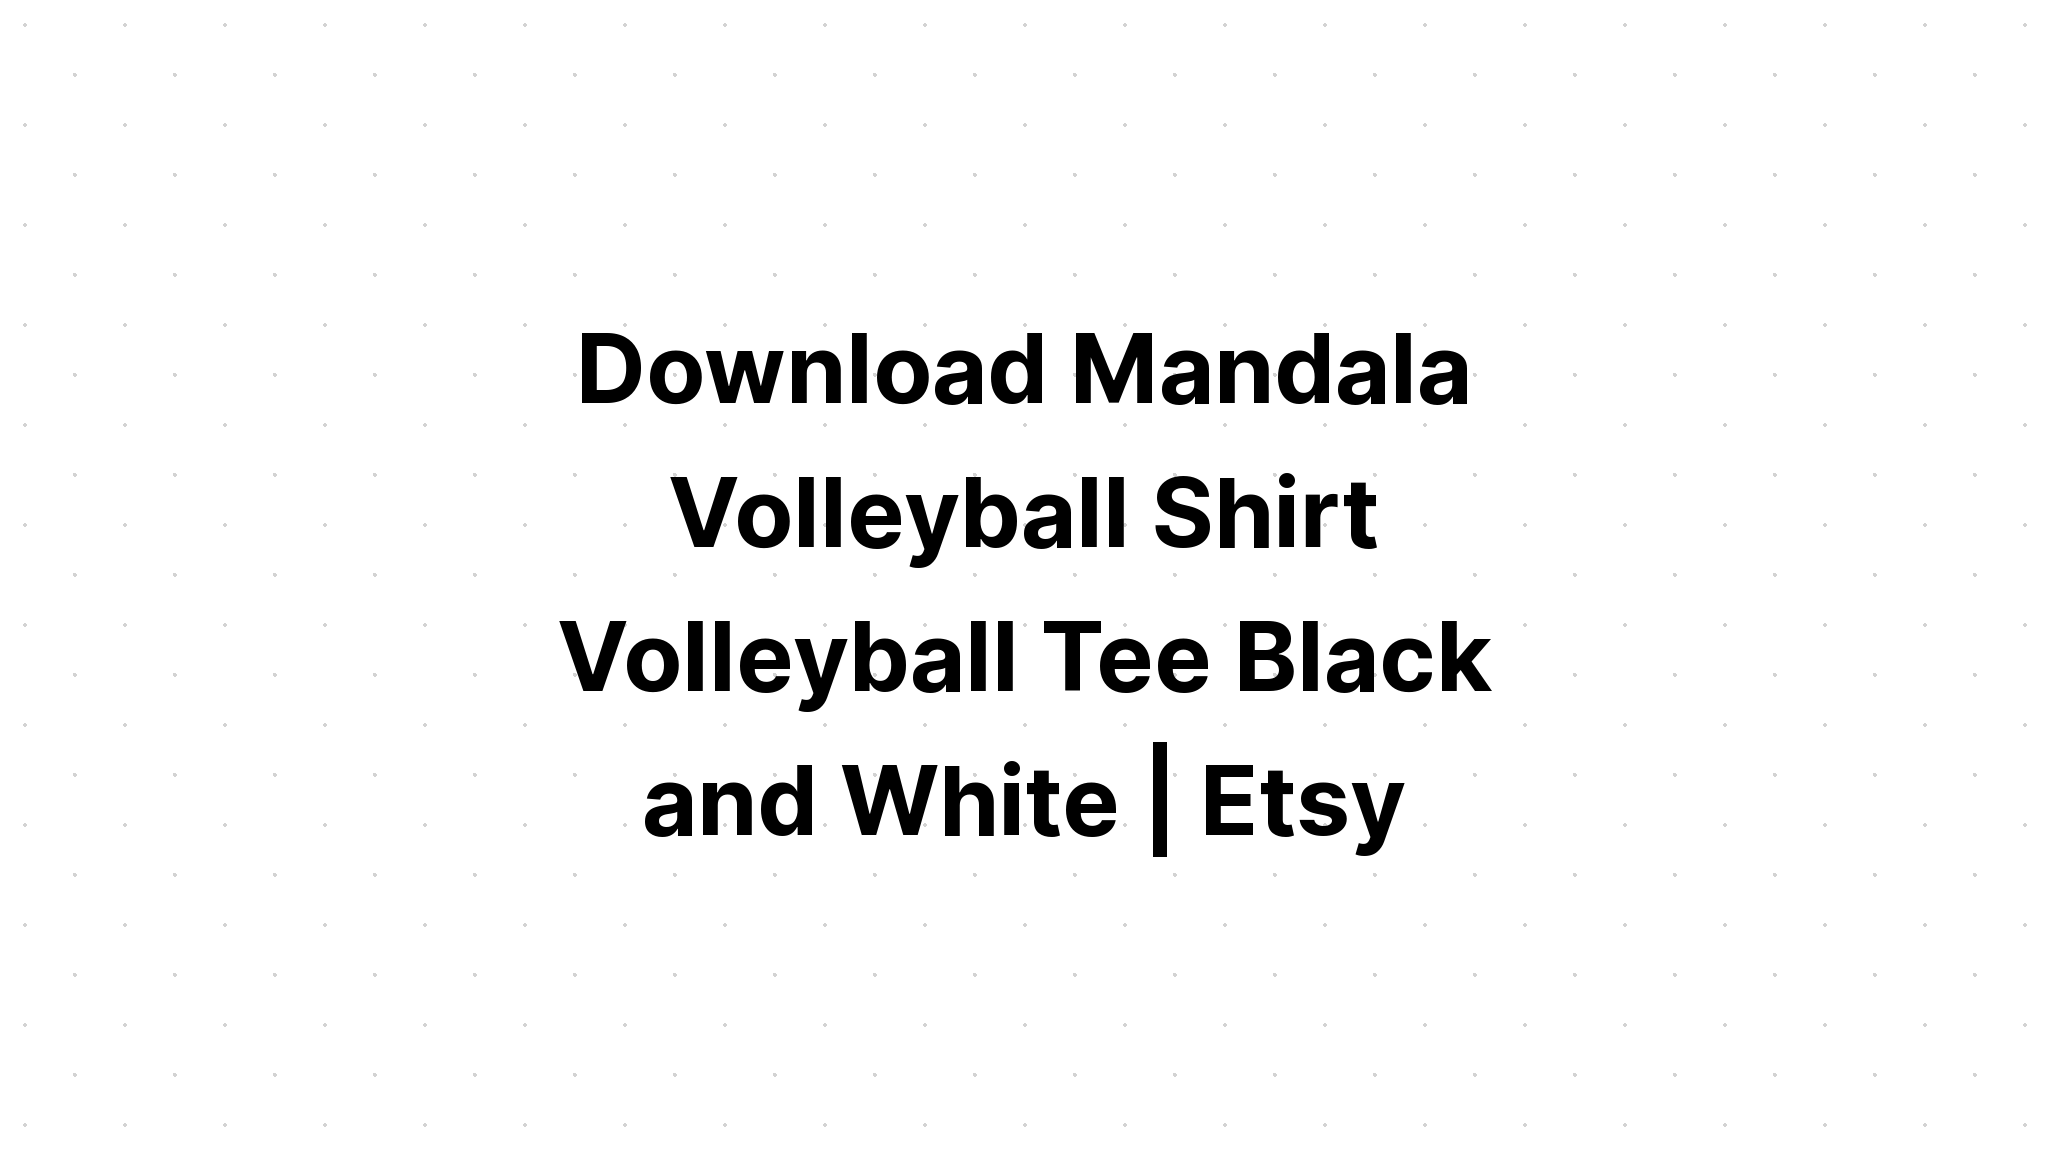 Download Layered Volleyball Mandala Svg Design Layered Svg Cut File